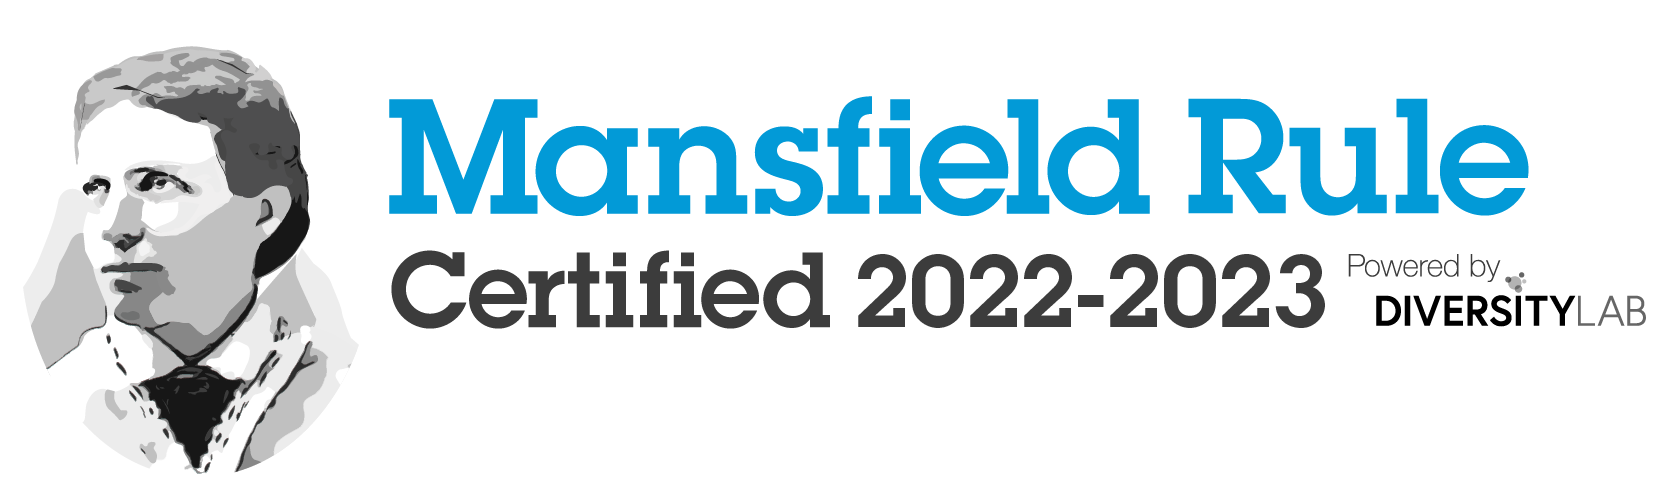 Mansfield 2022-2023